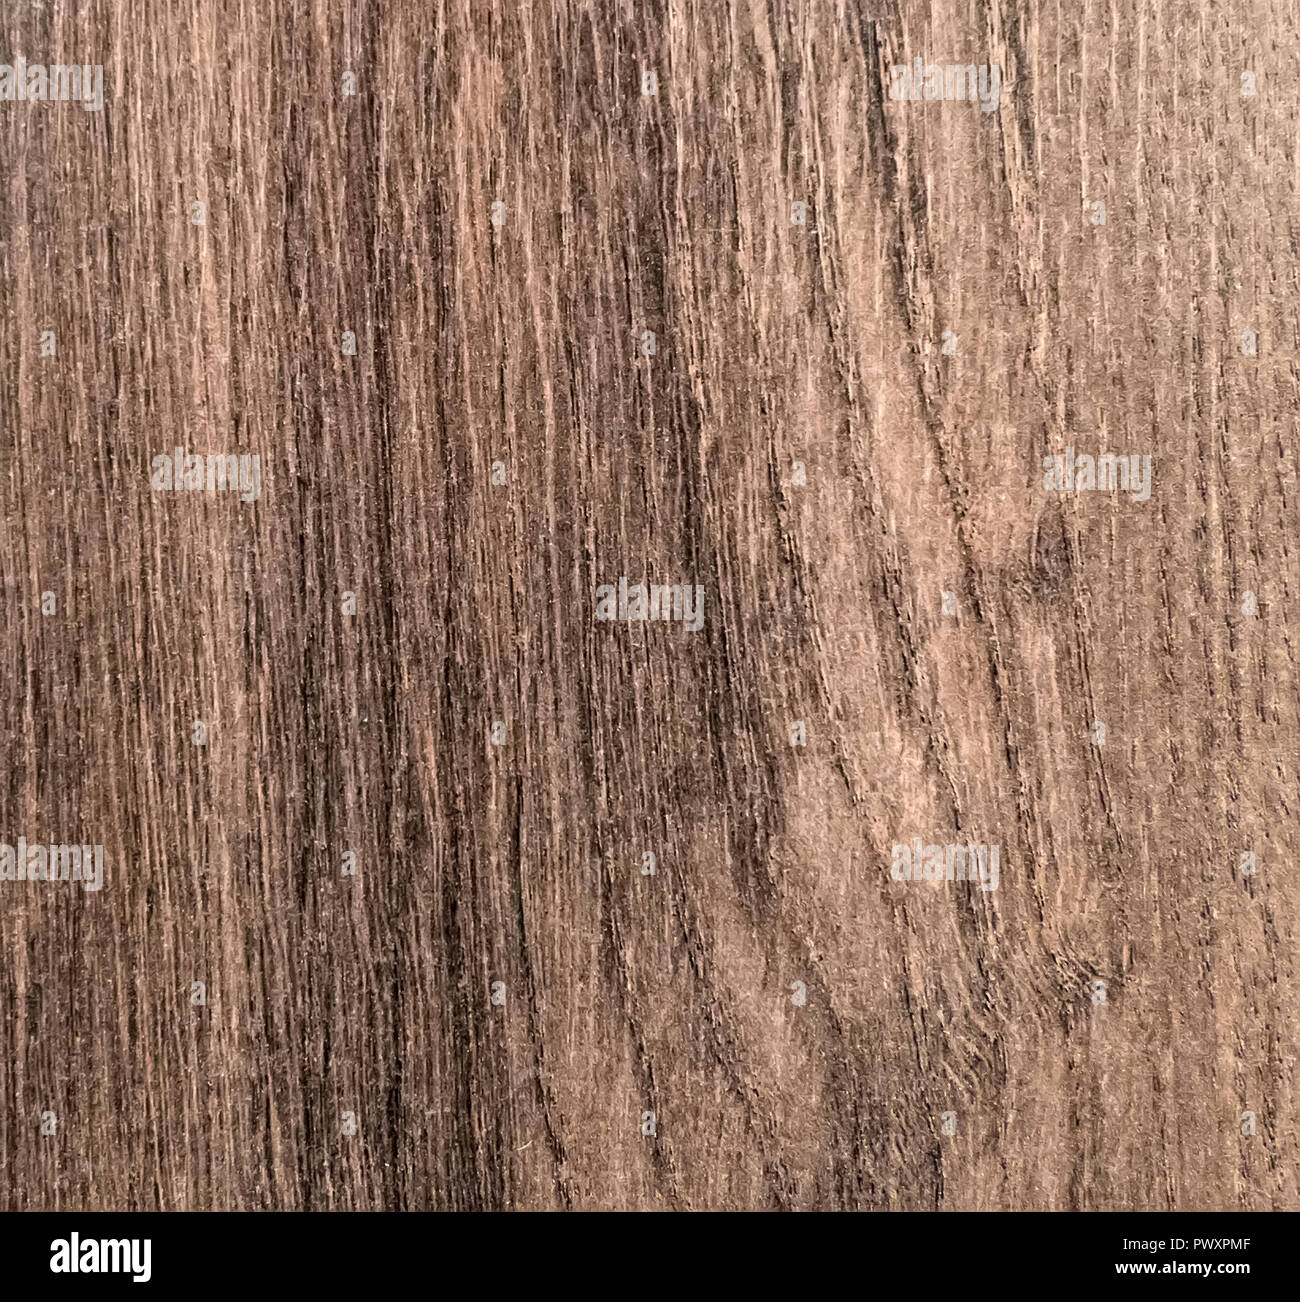 black wall wood texture background. Brown wood flooring background. Wooden parquet. Laminate flooring Stock Photo